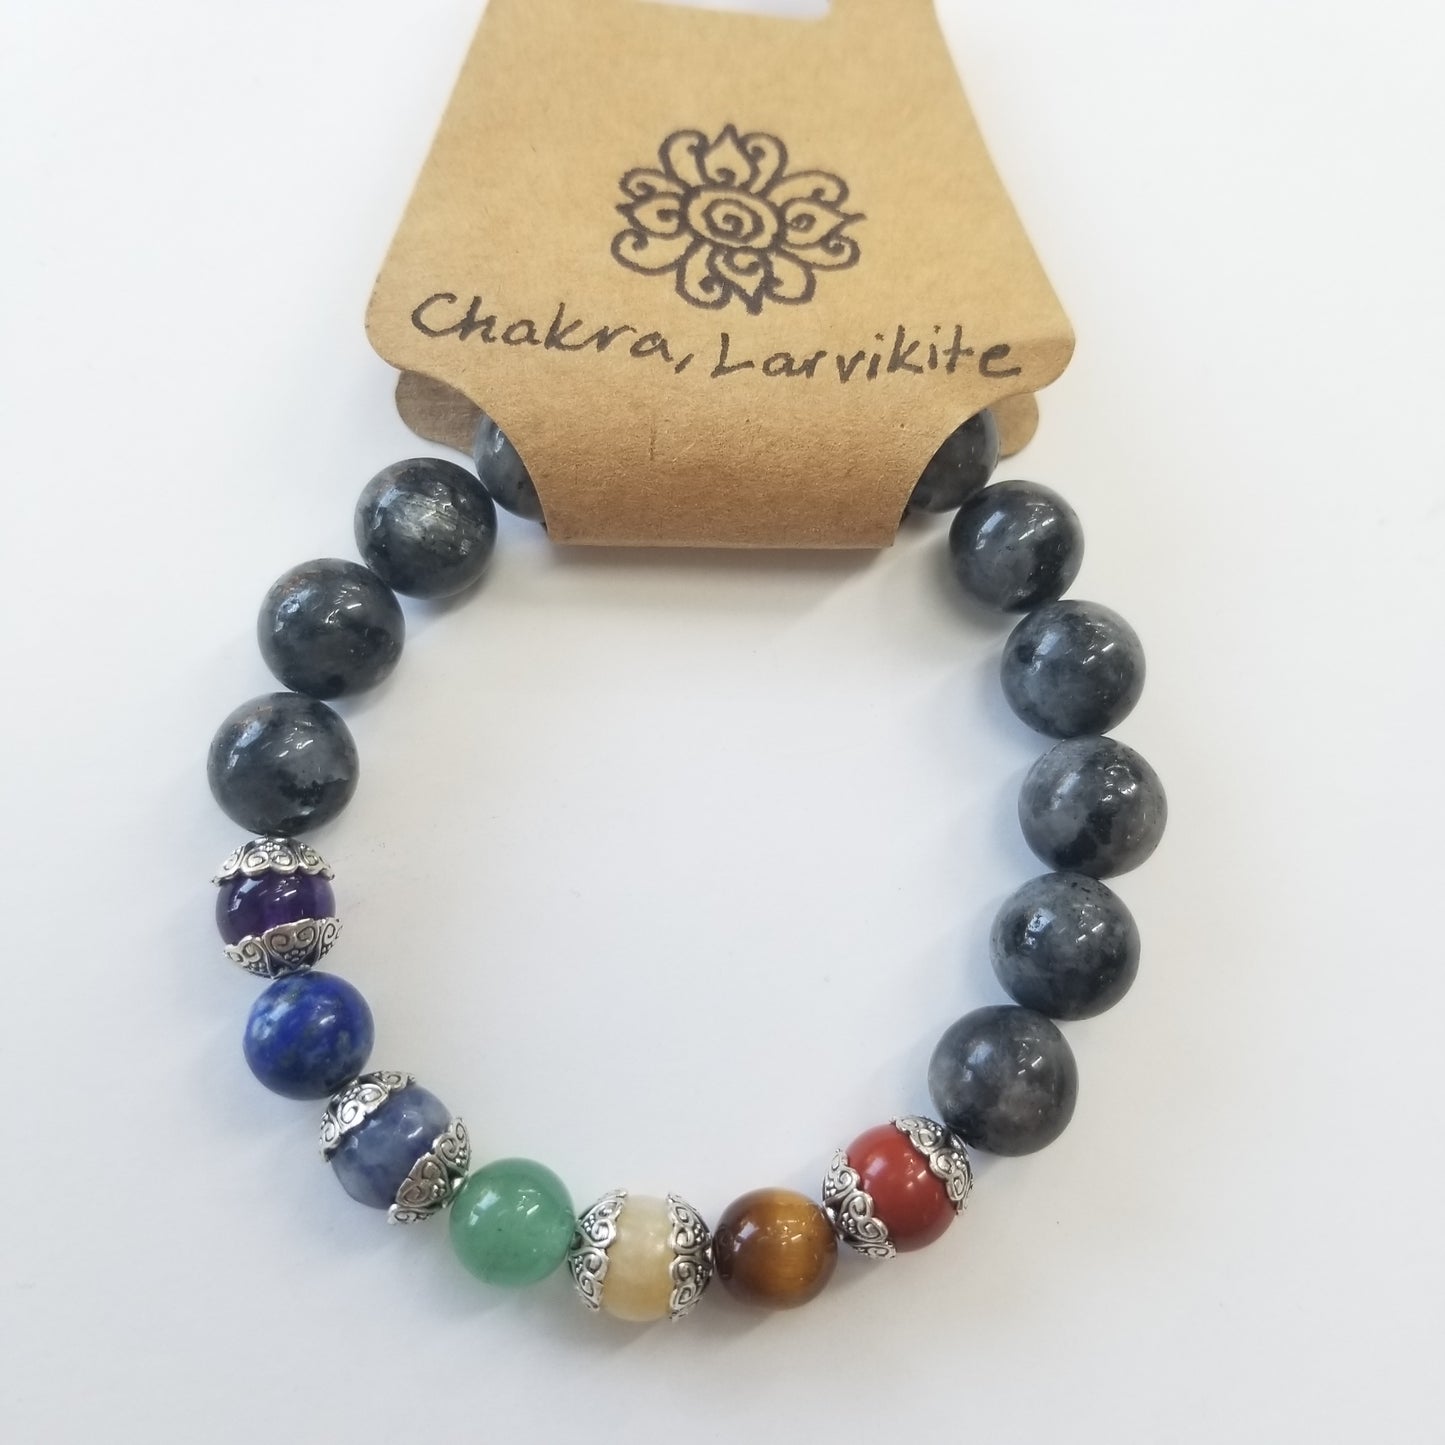 Chakra & Larvikite Crystal Bracelet